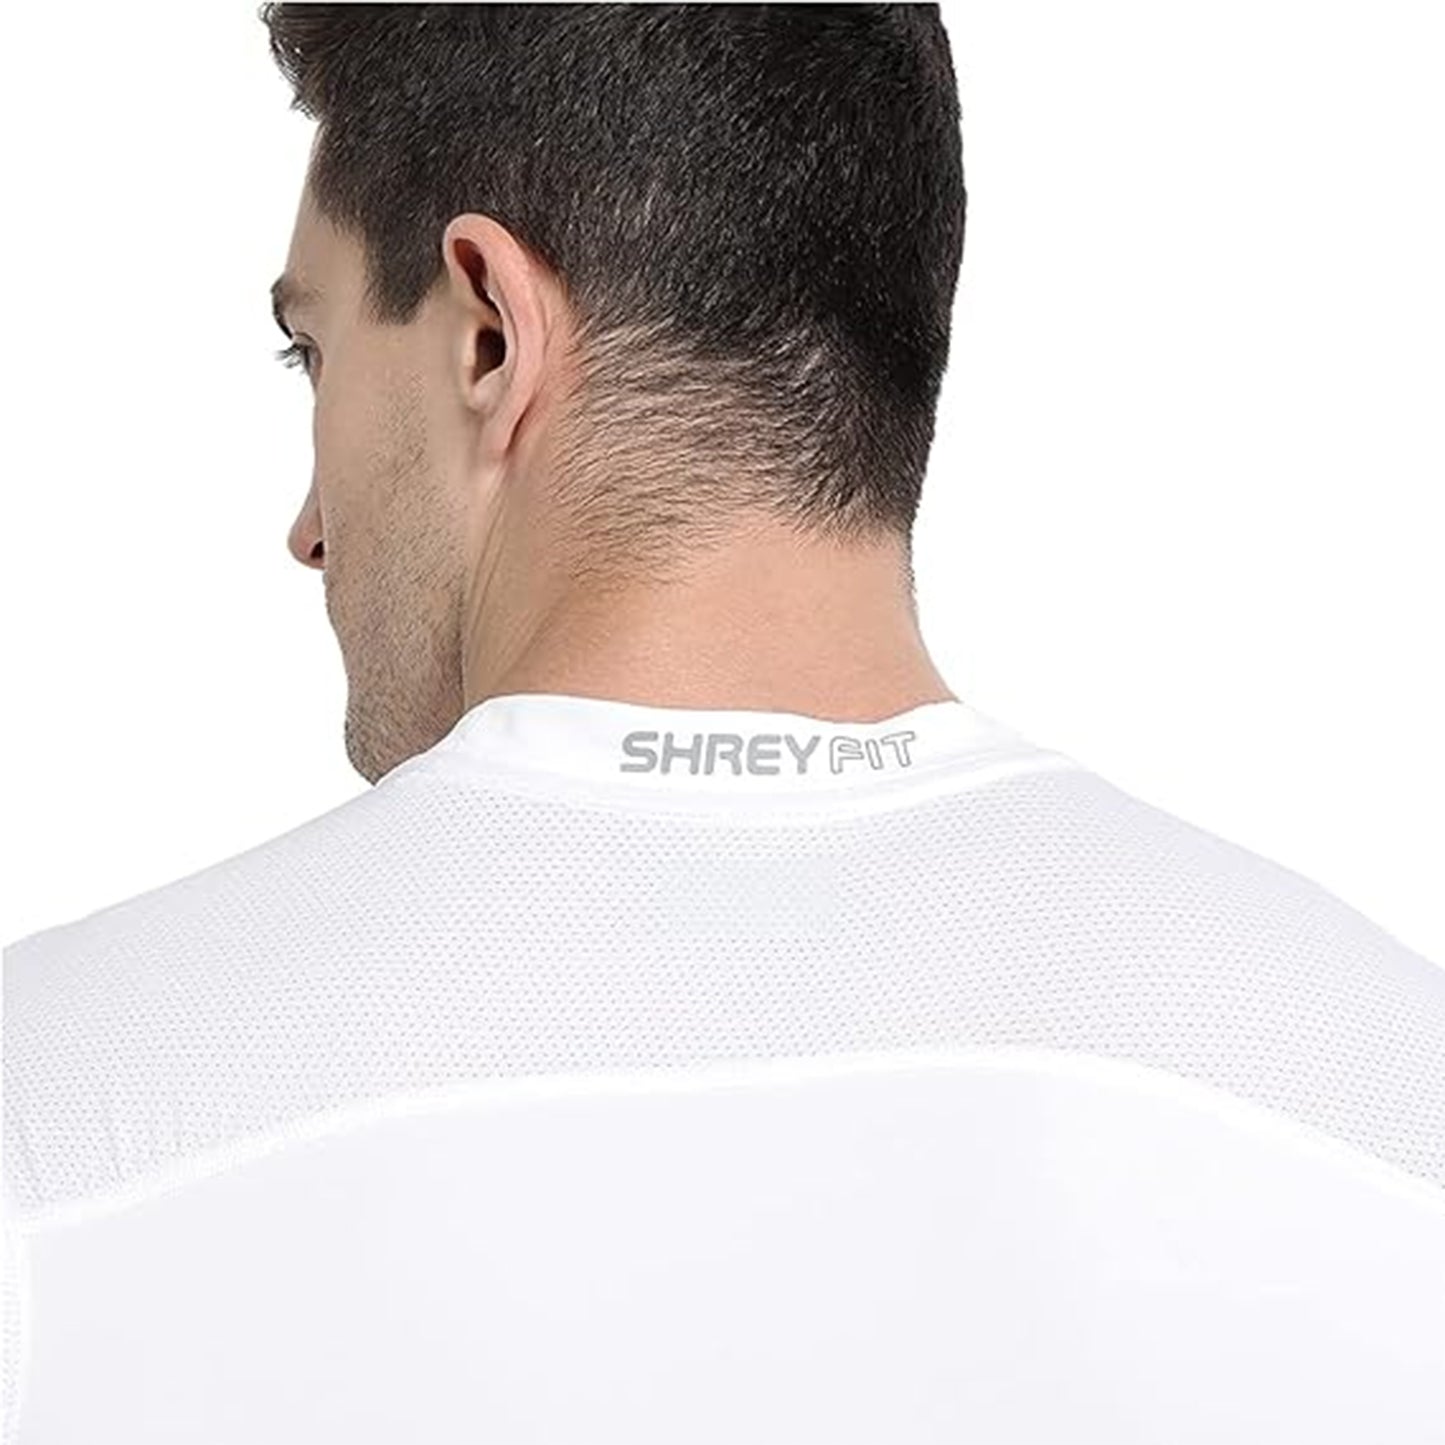 Shrey 1758 Intense Compressions Sleeveless Top - Best Price online Prokicksports.com